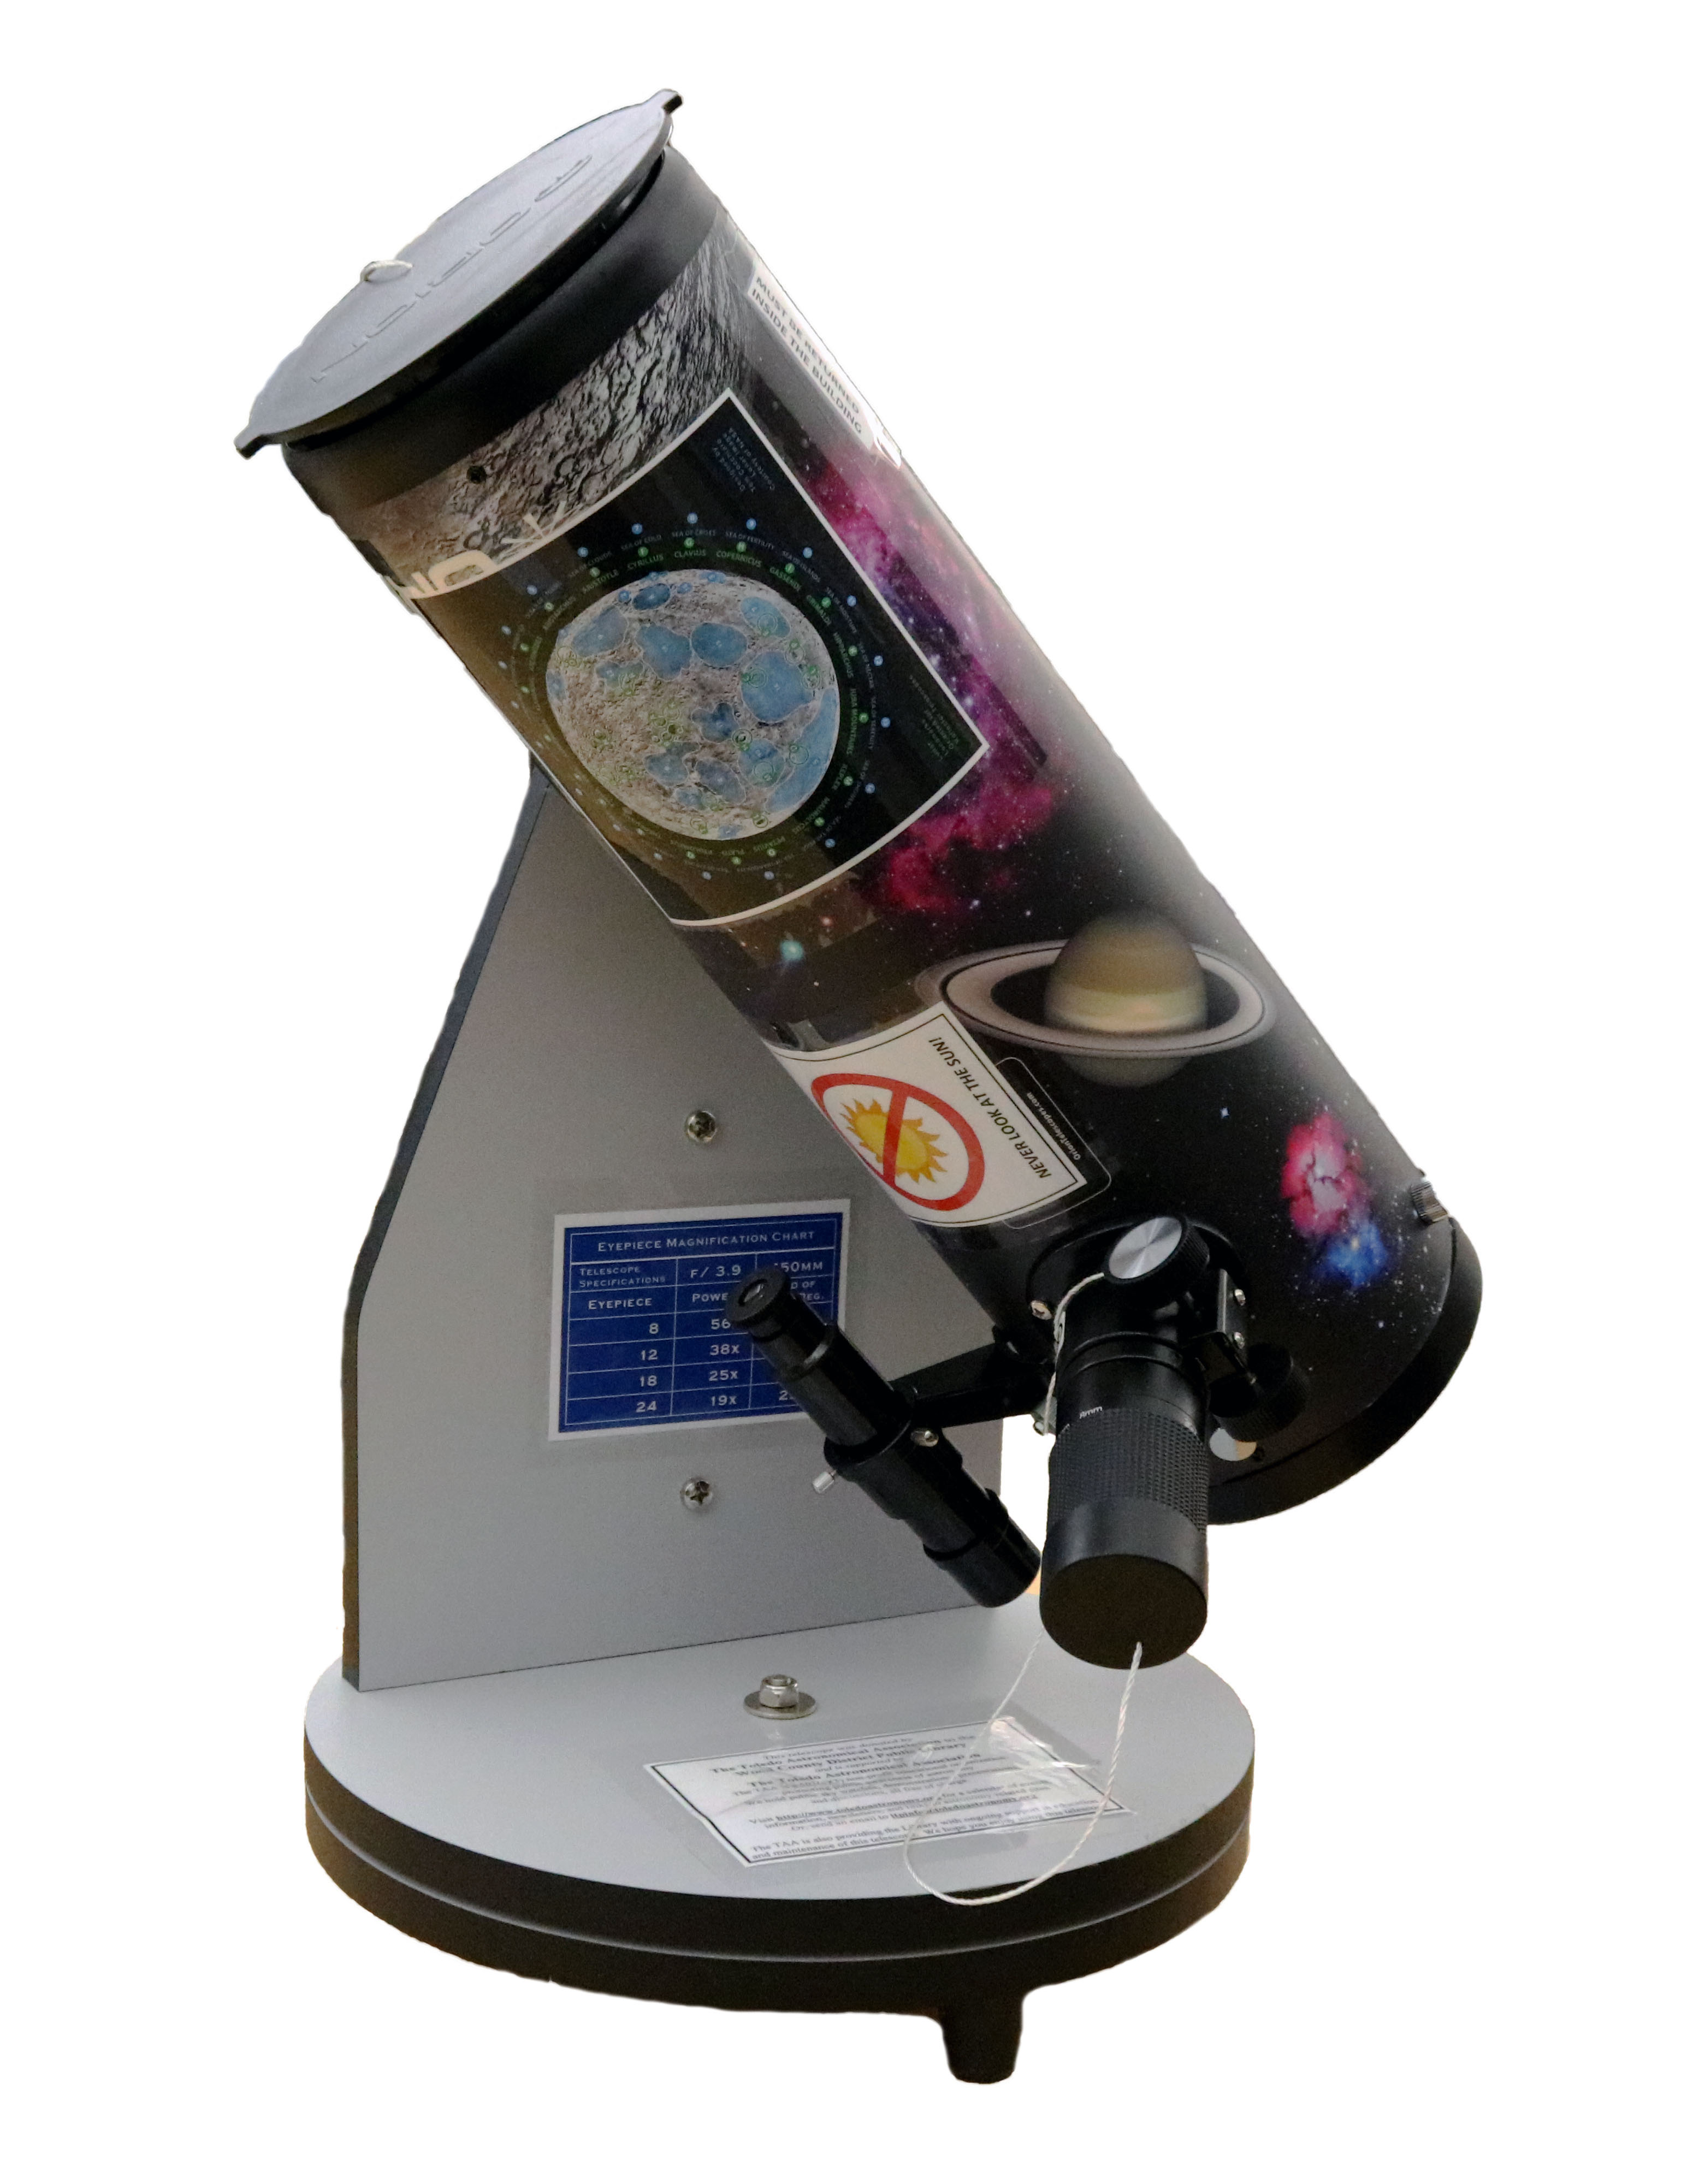 Photo of a telescope